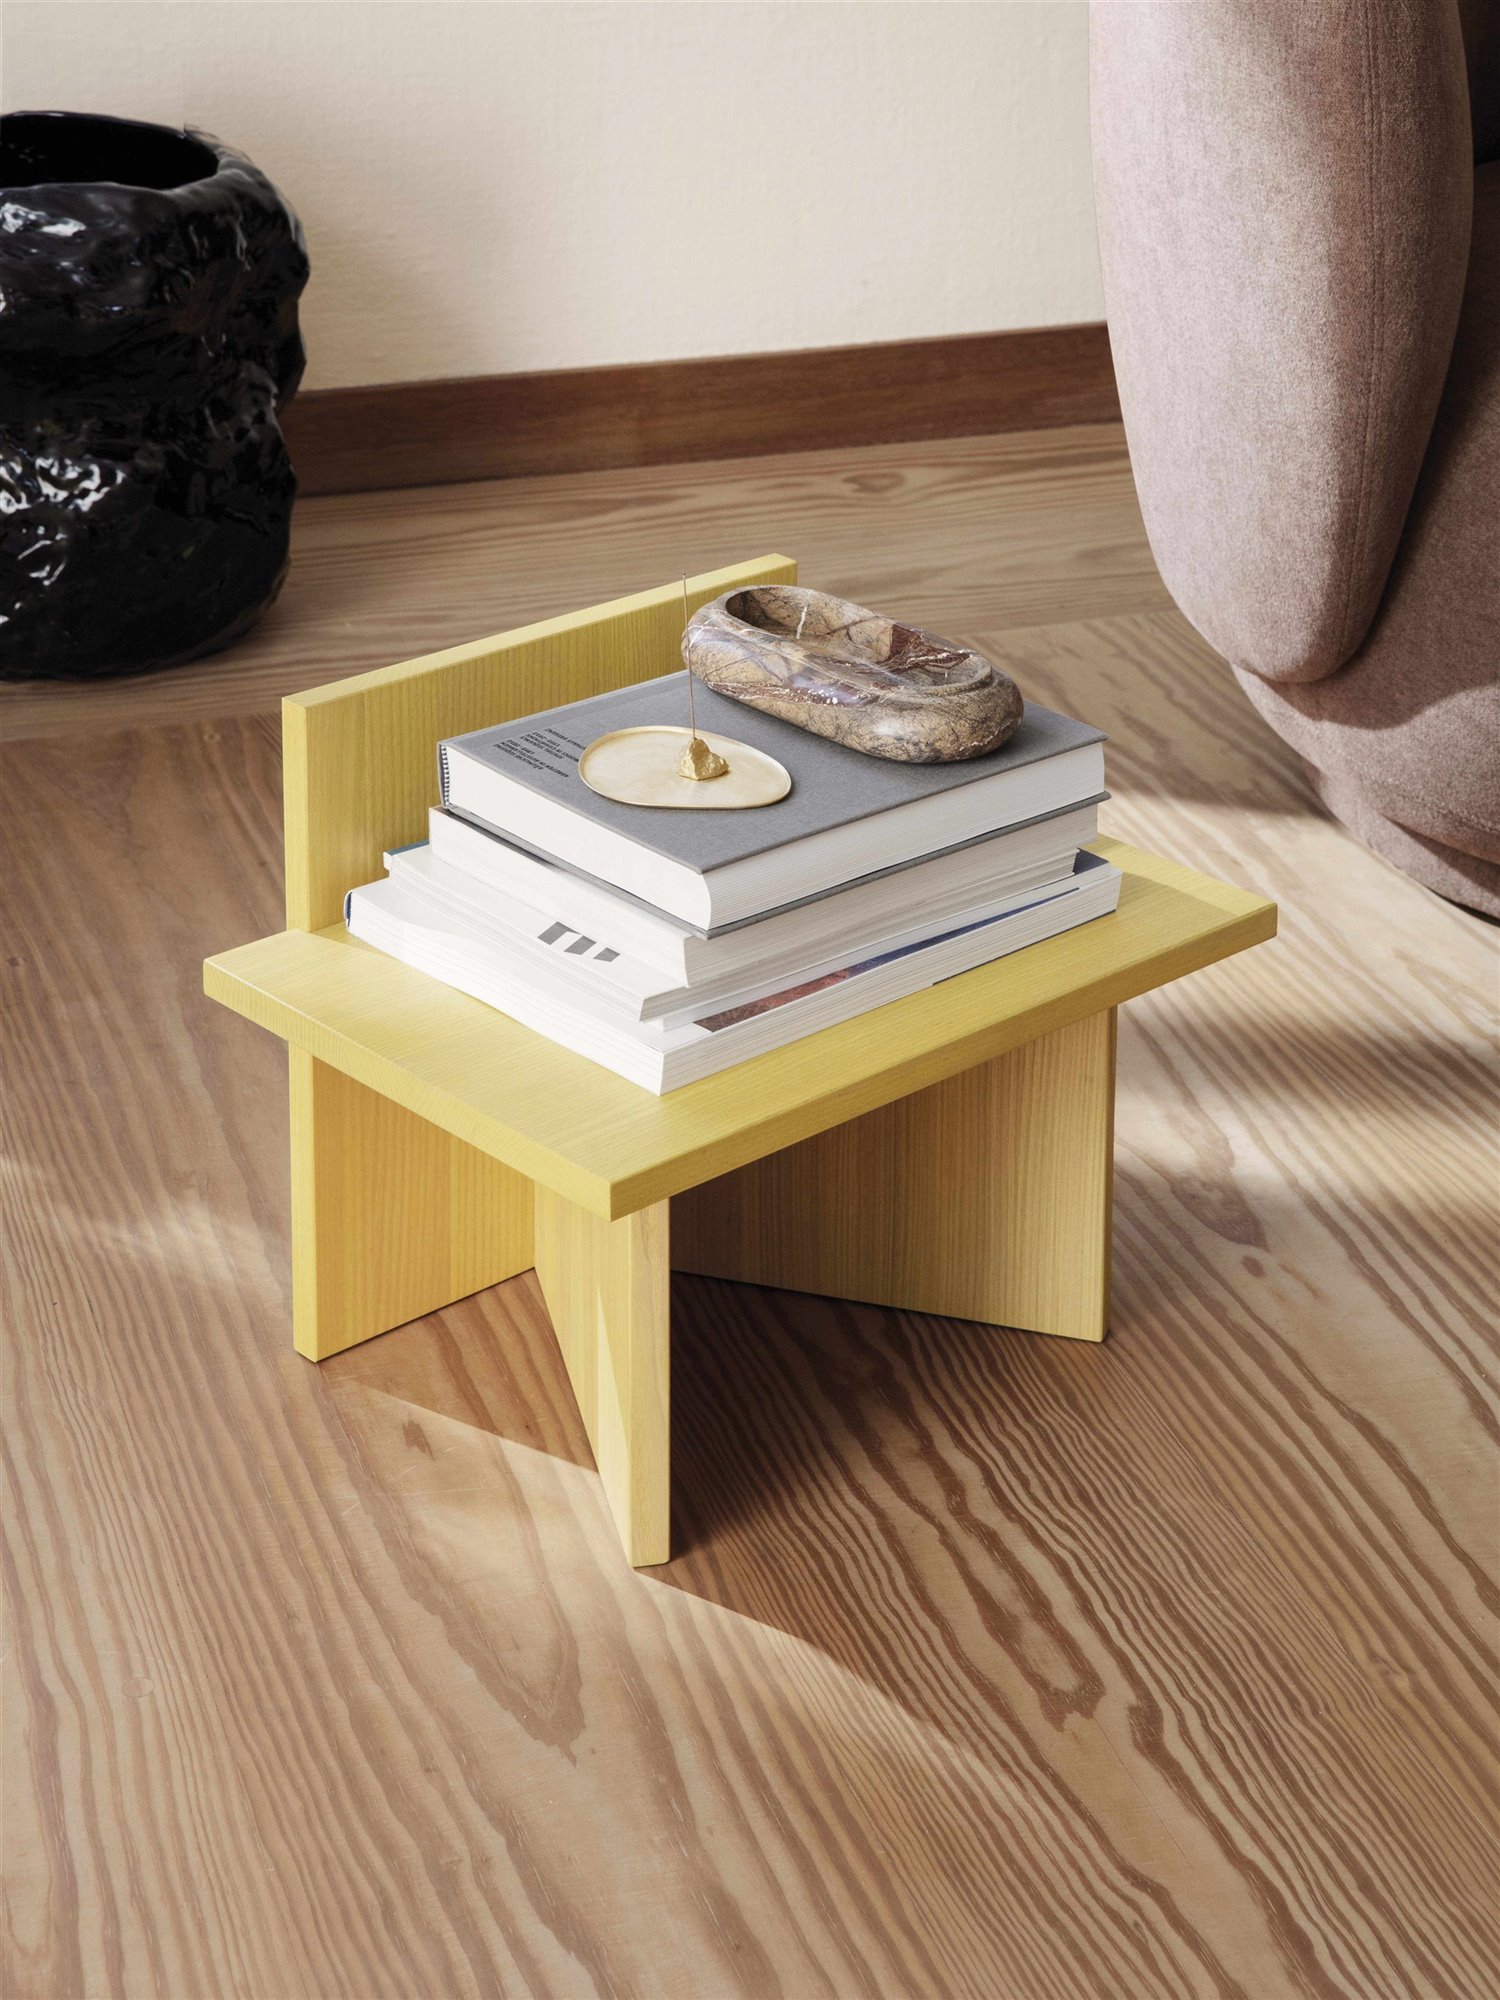 taburete madera amarillo con libros 